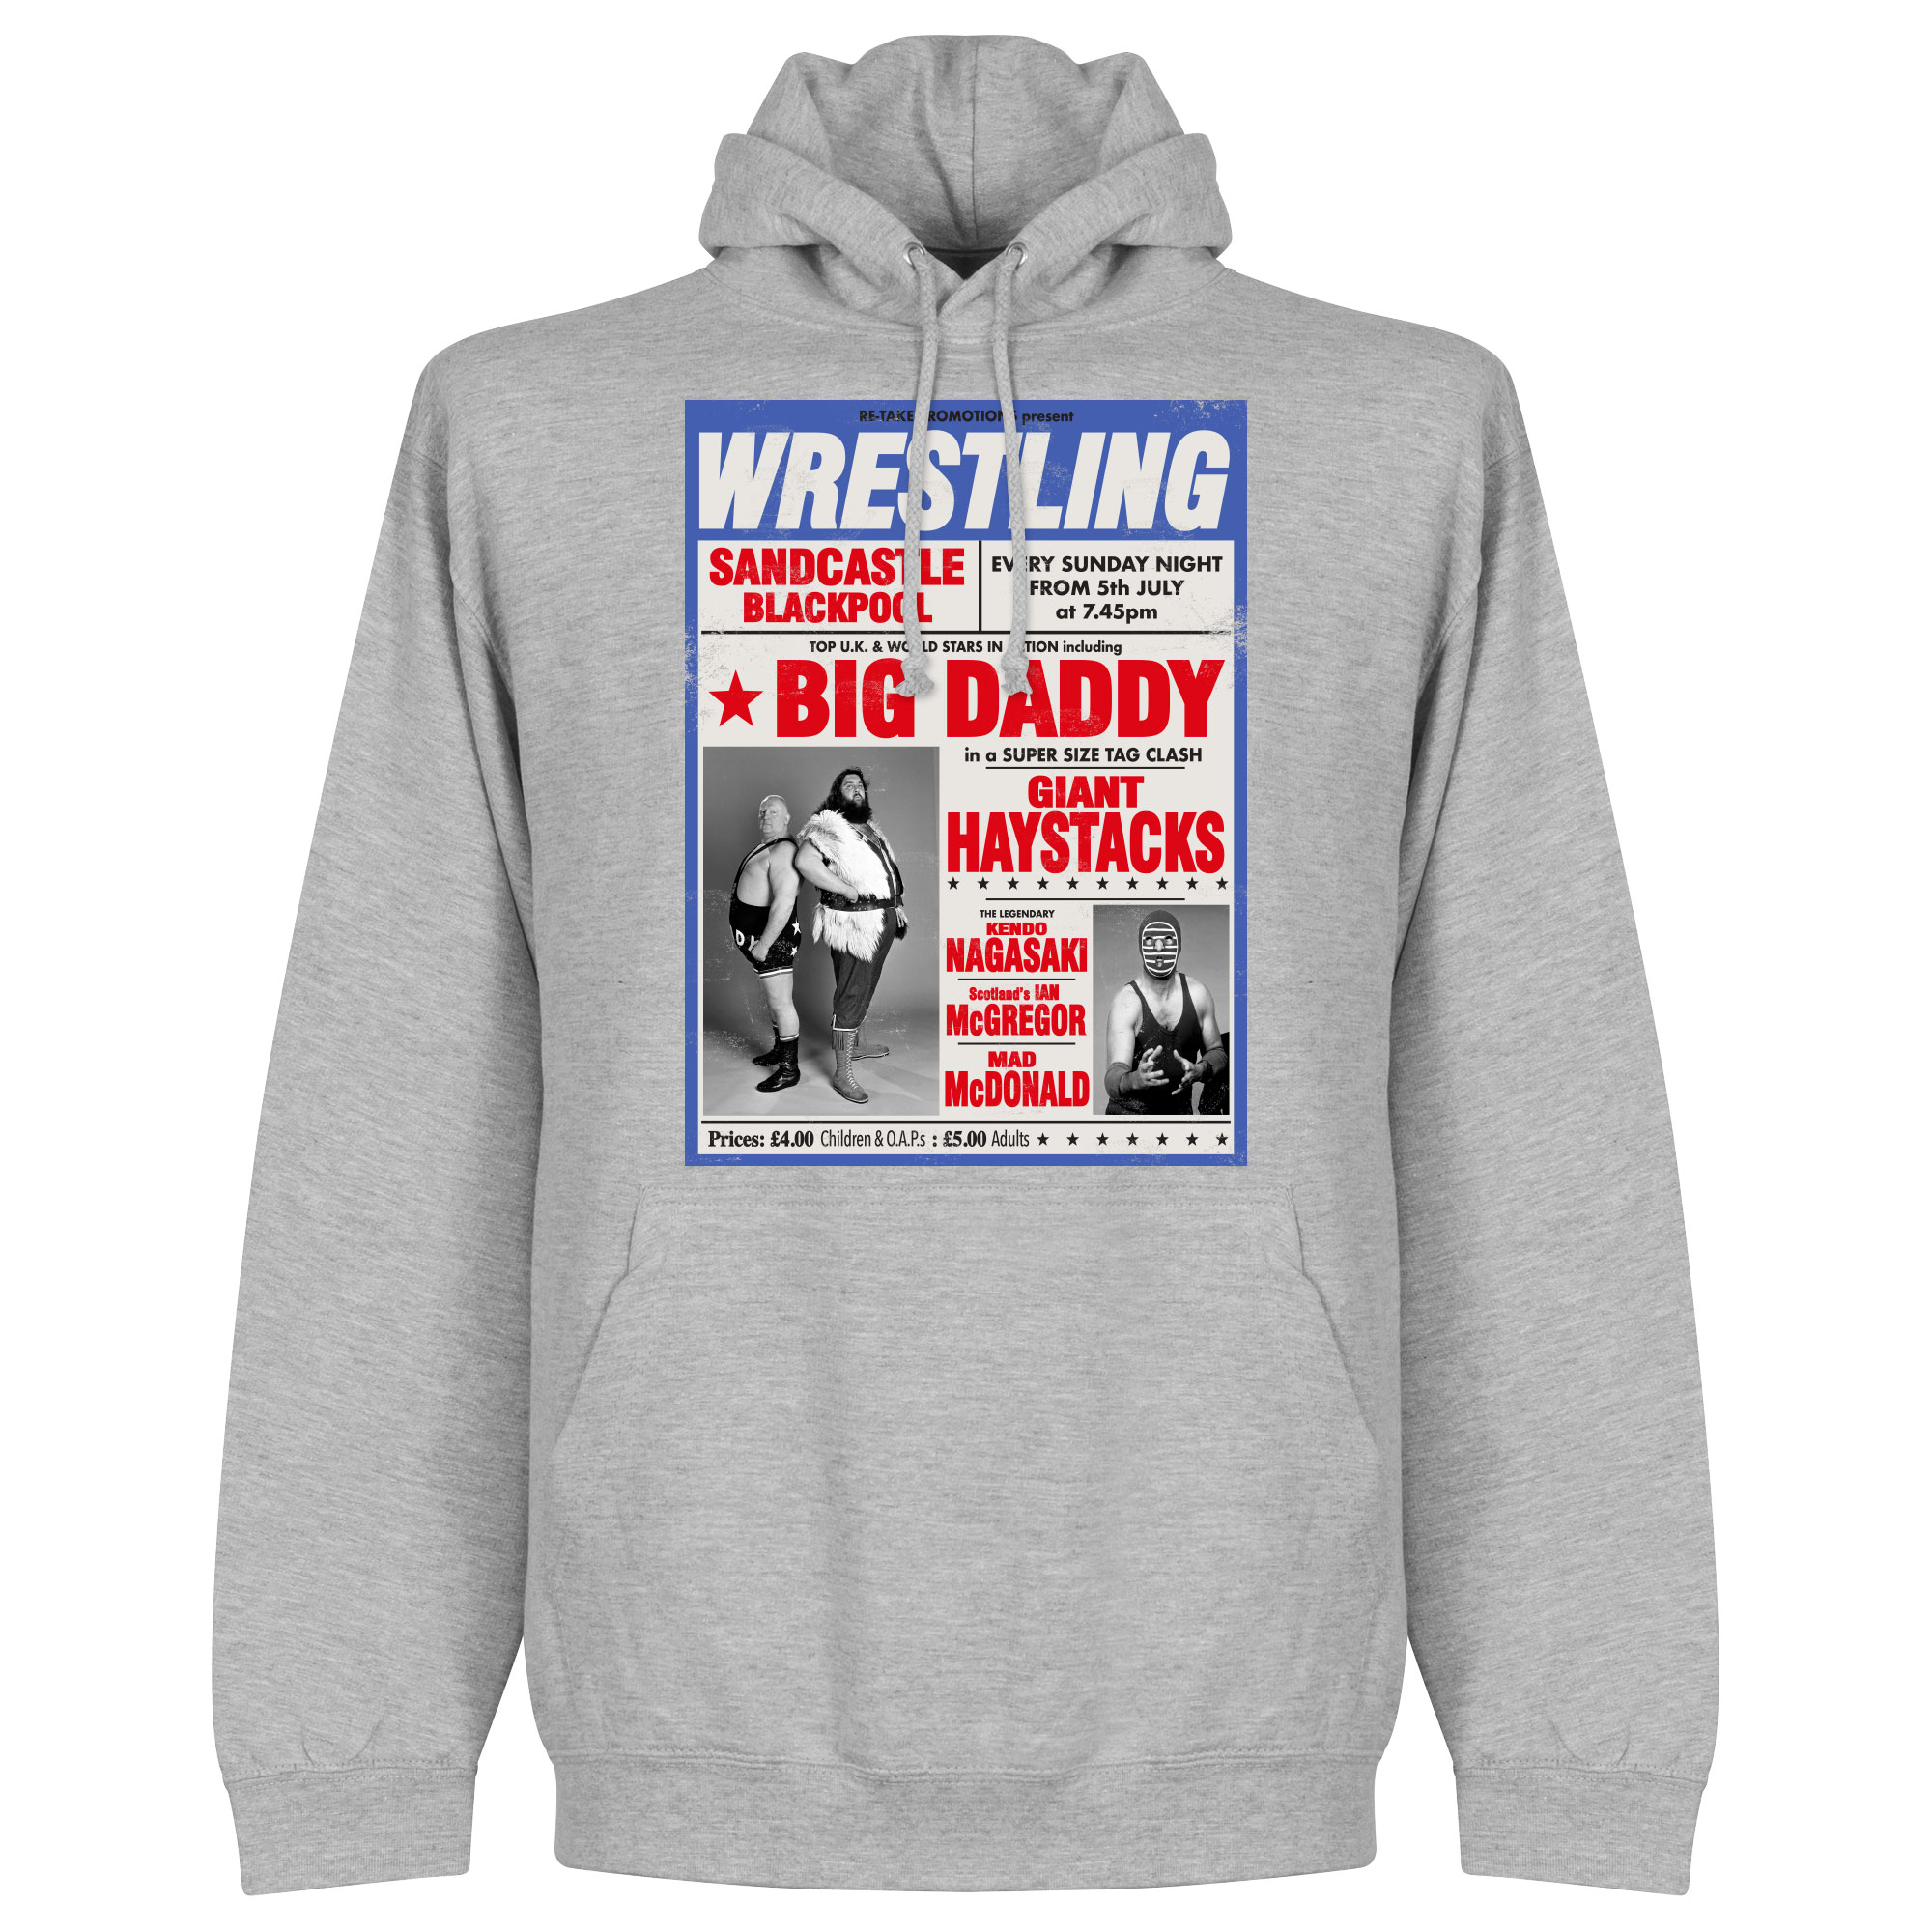 Big Daddy vs Giant Haystack Wrestling Poster Hoodie -Grijs